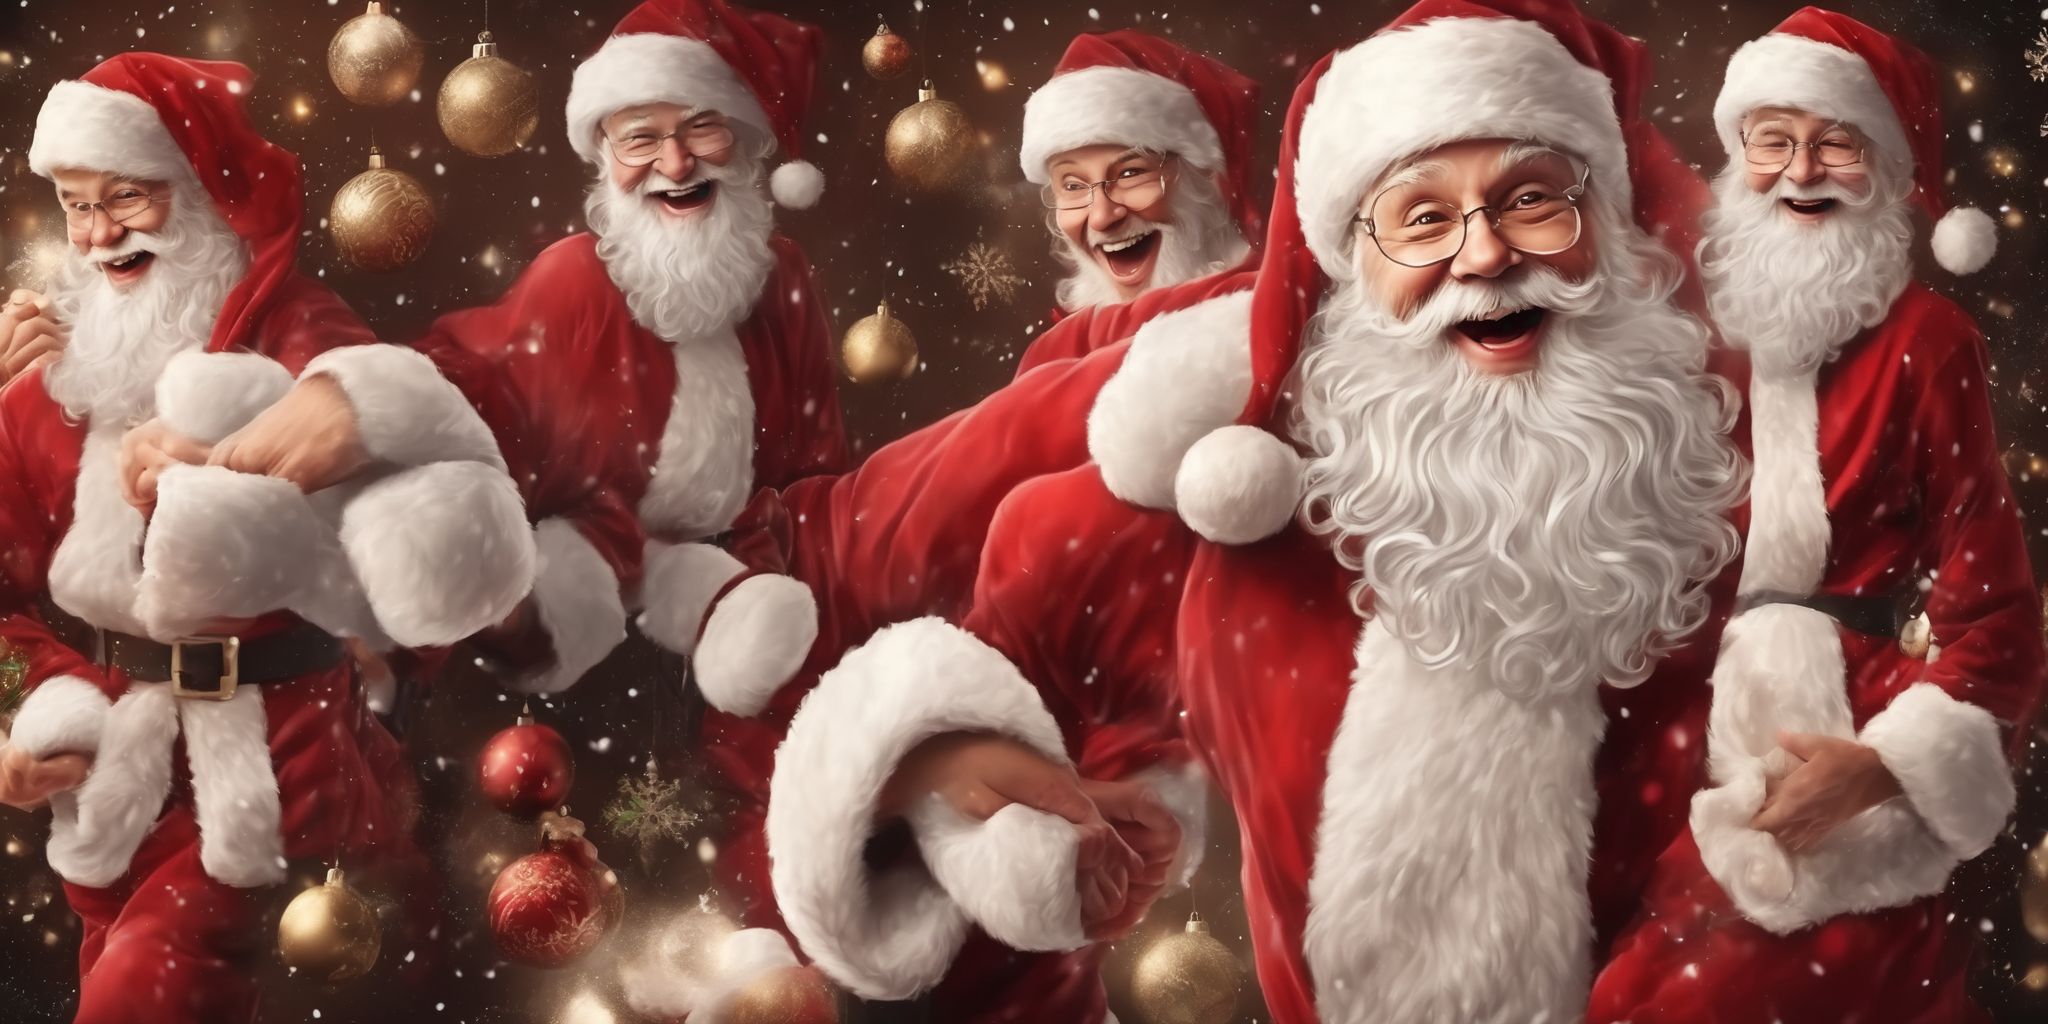 Joyful Santa in realistic Christmas style